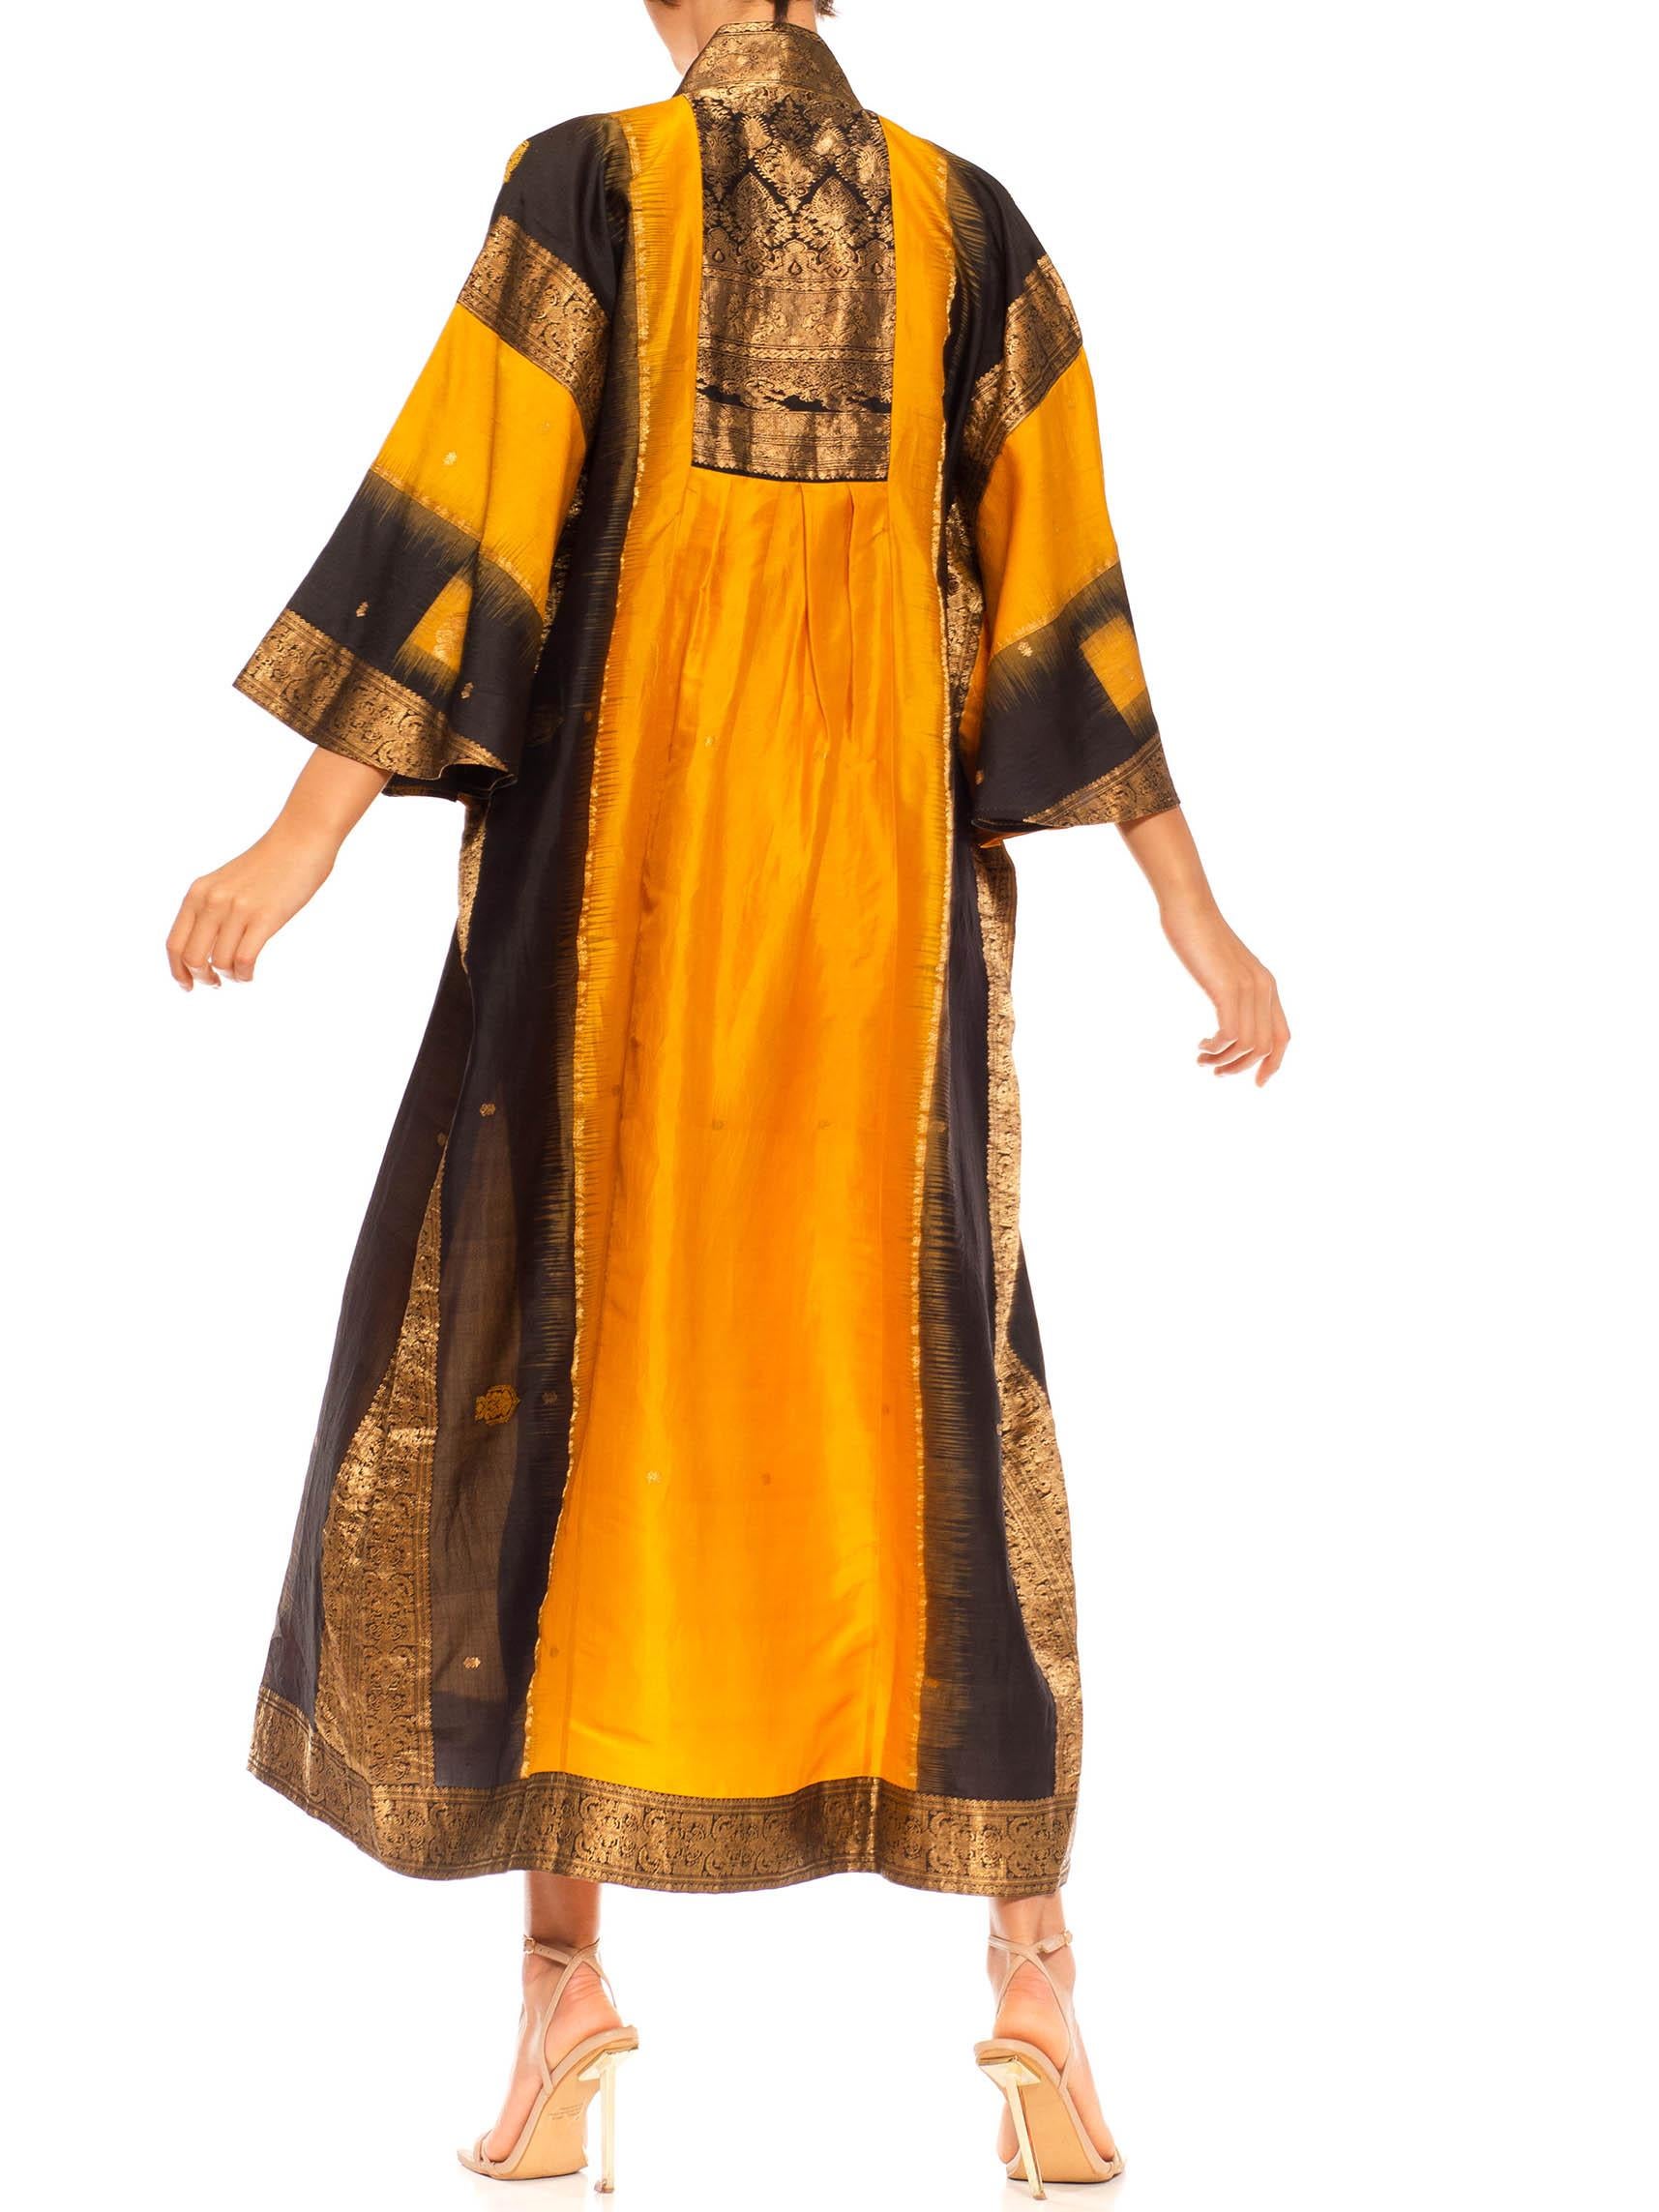 Morphew Collection Saffron, Black & Gold Silk Kaftan Made From Vintage Saris For Sale 2